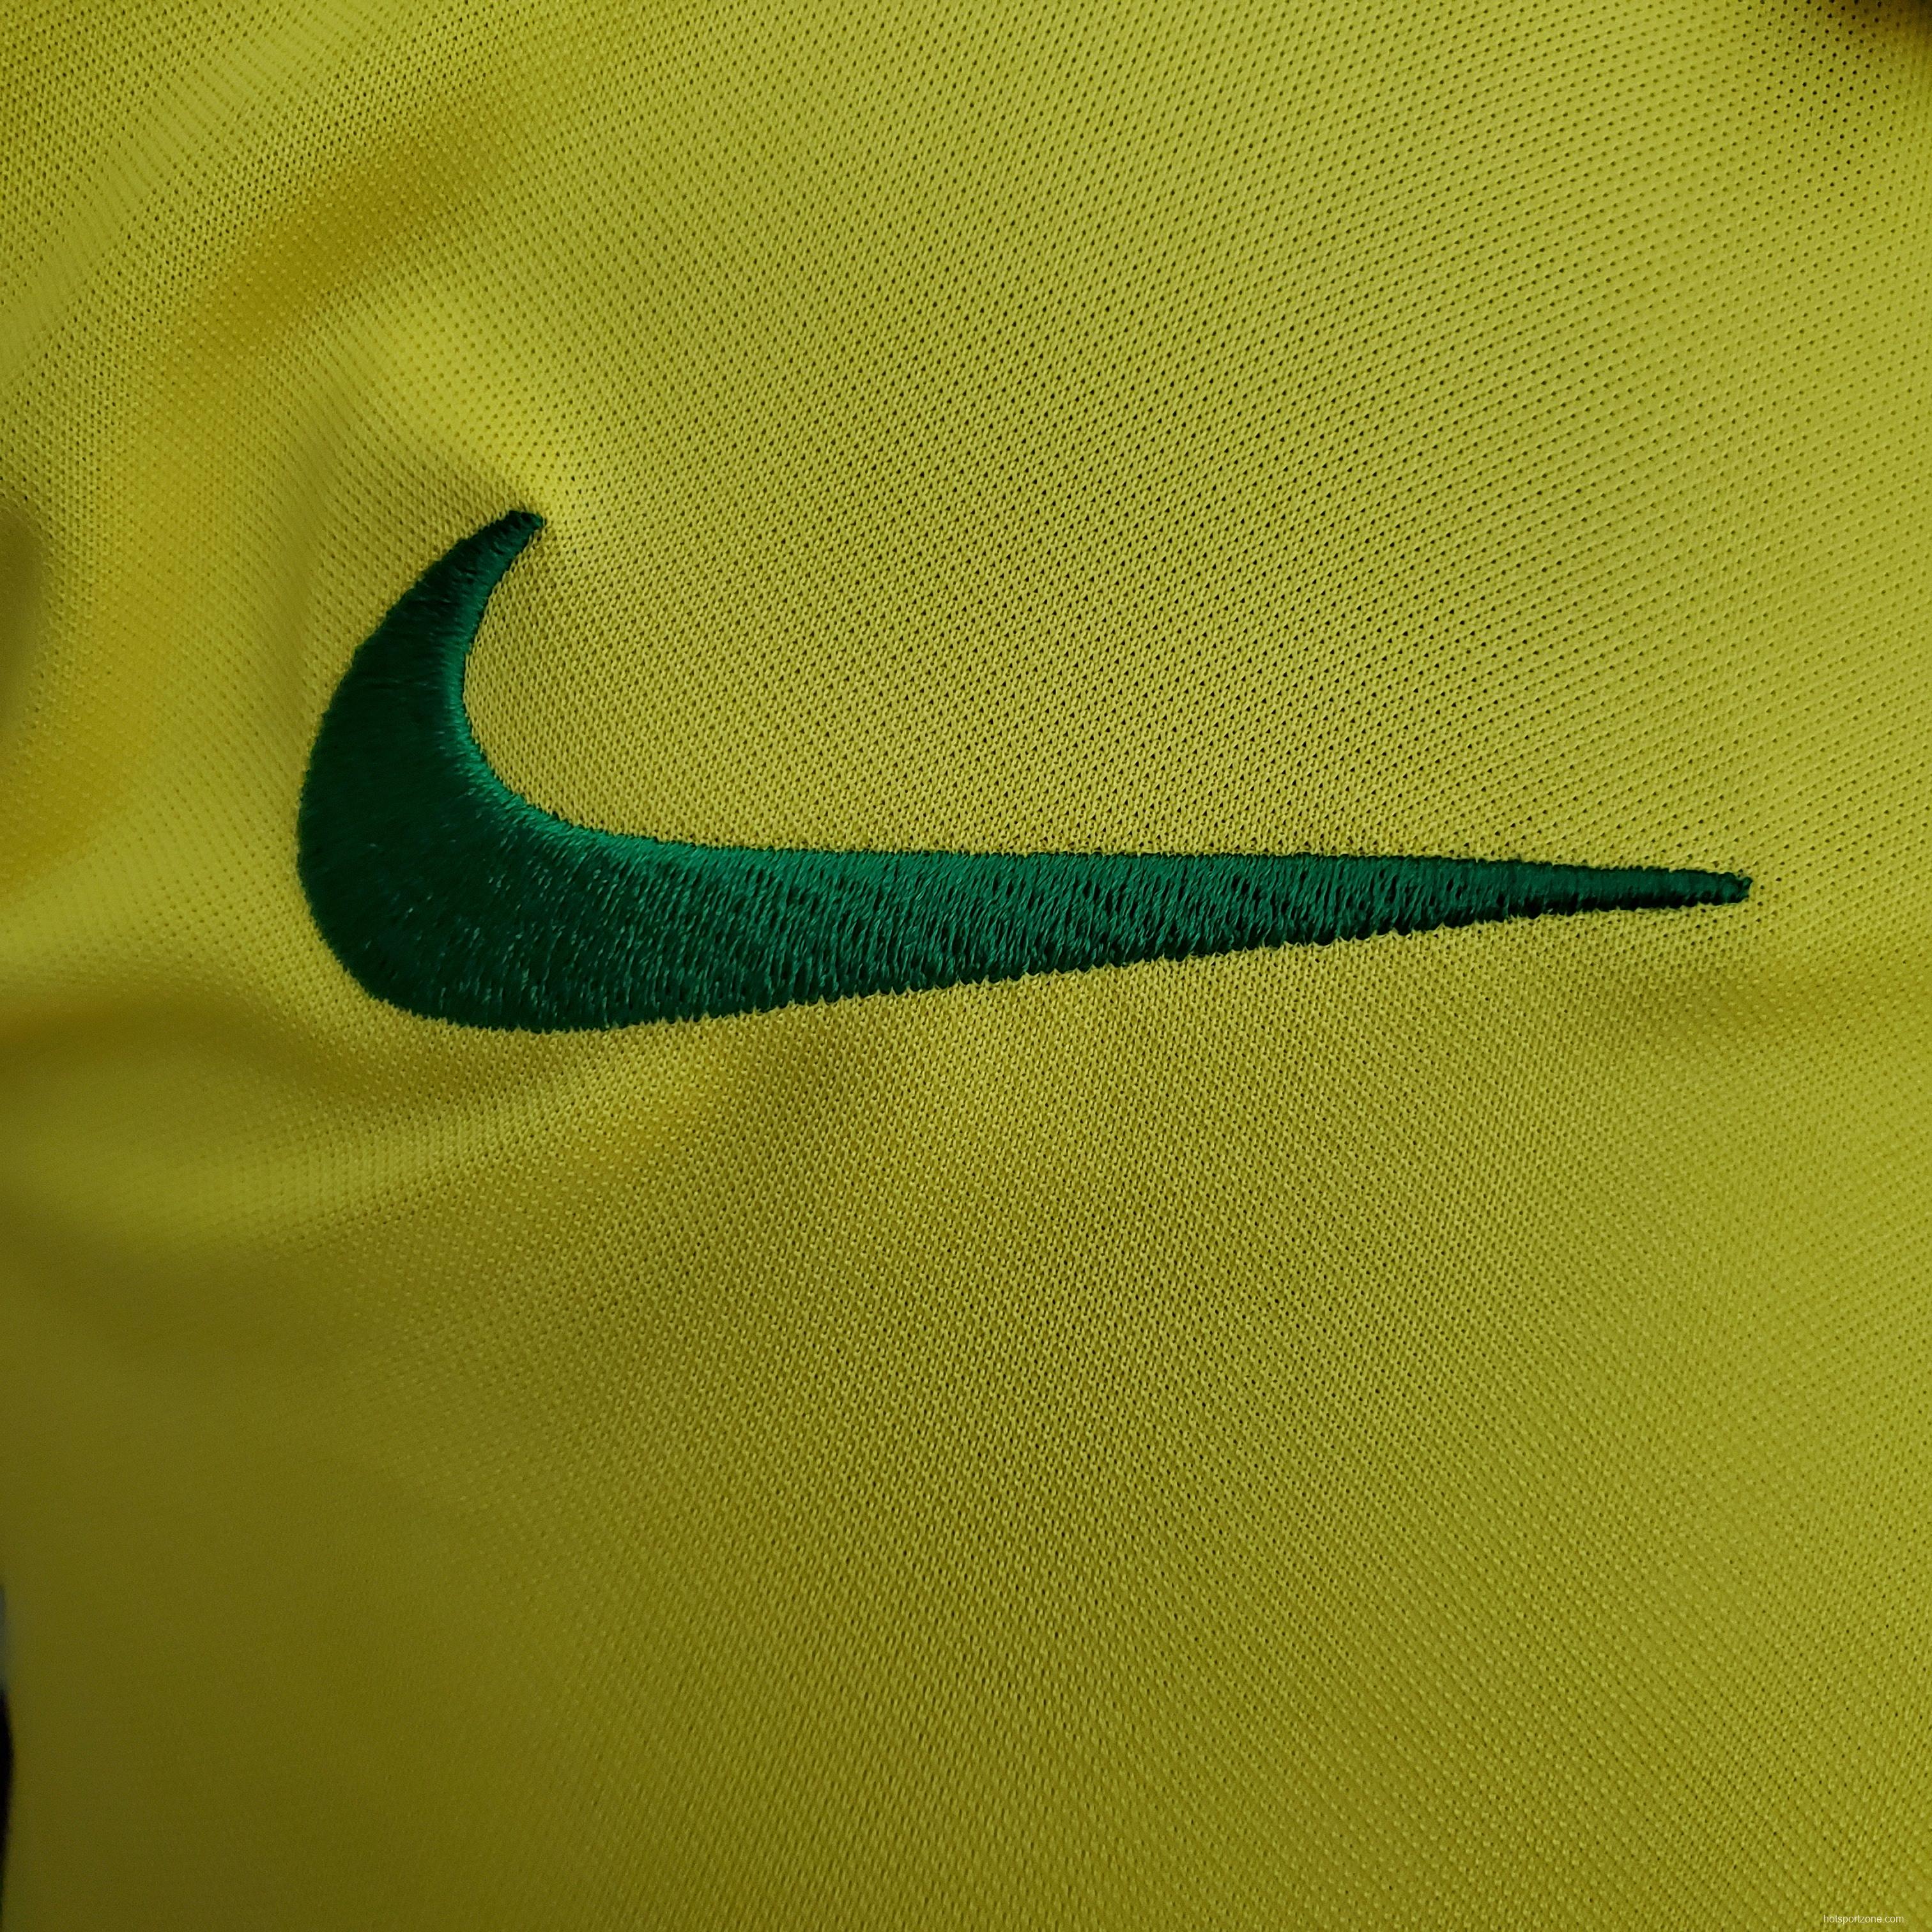 POLO Brazil Yellow Soccer Jersey